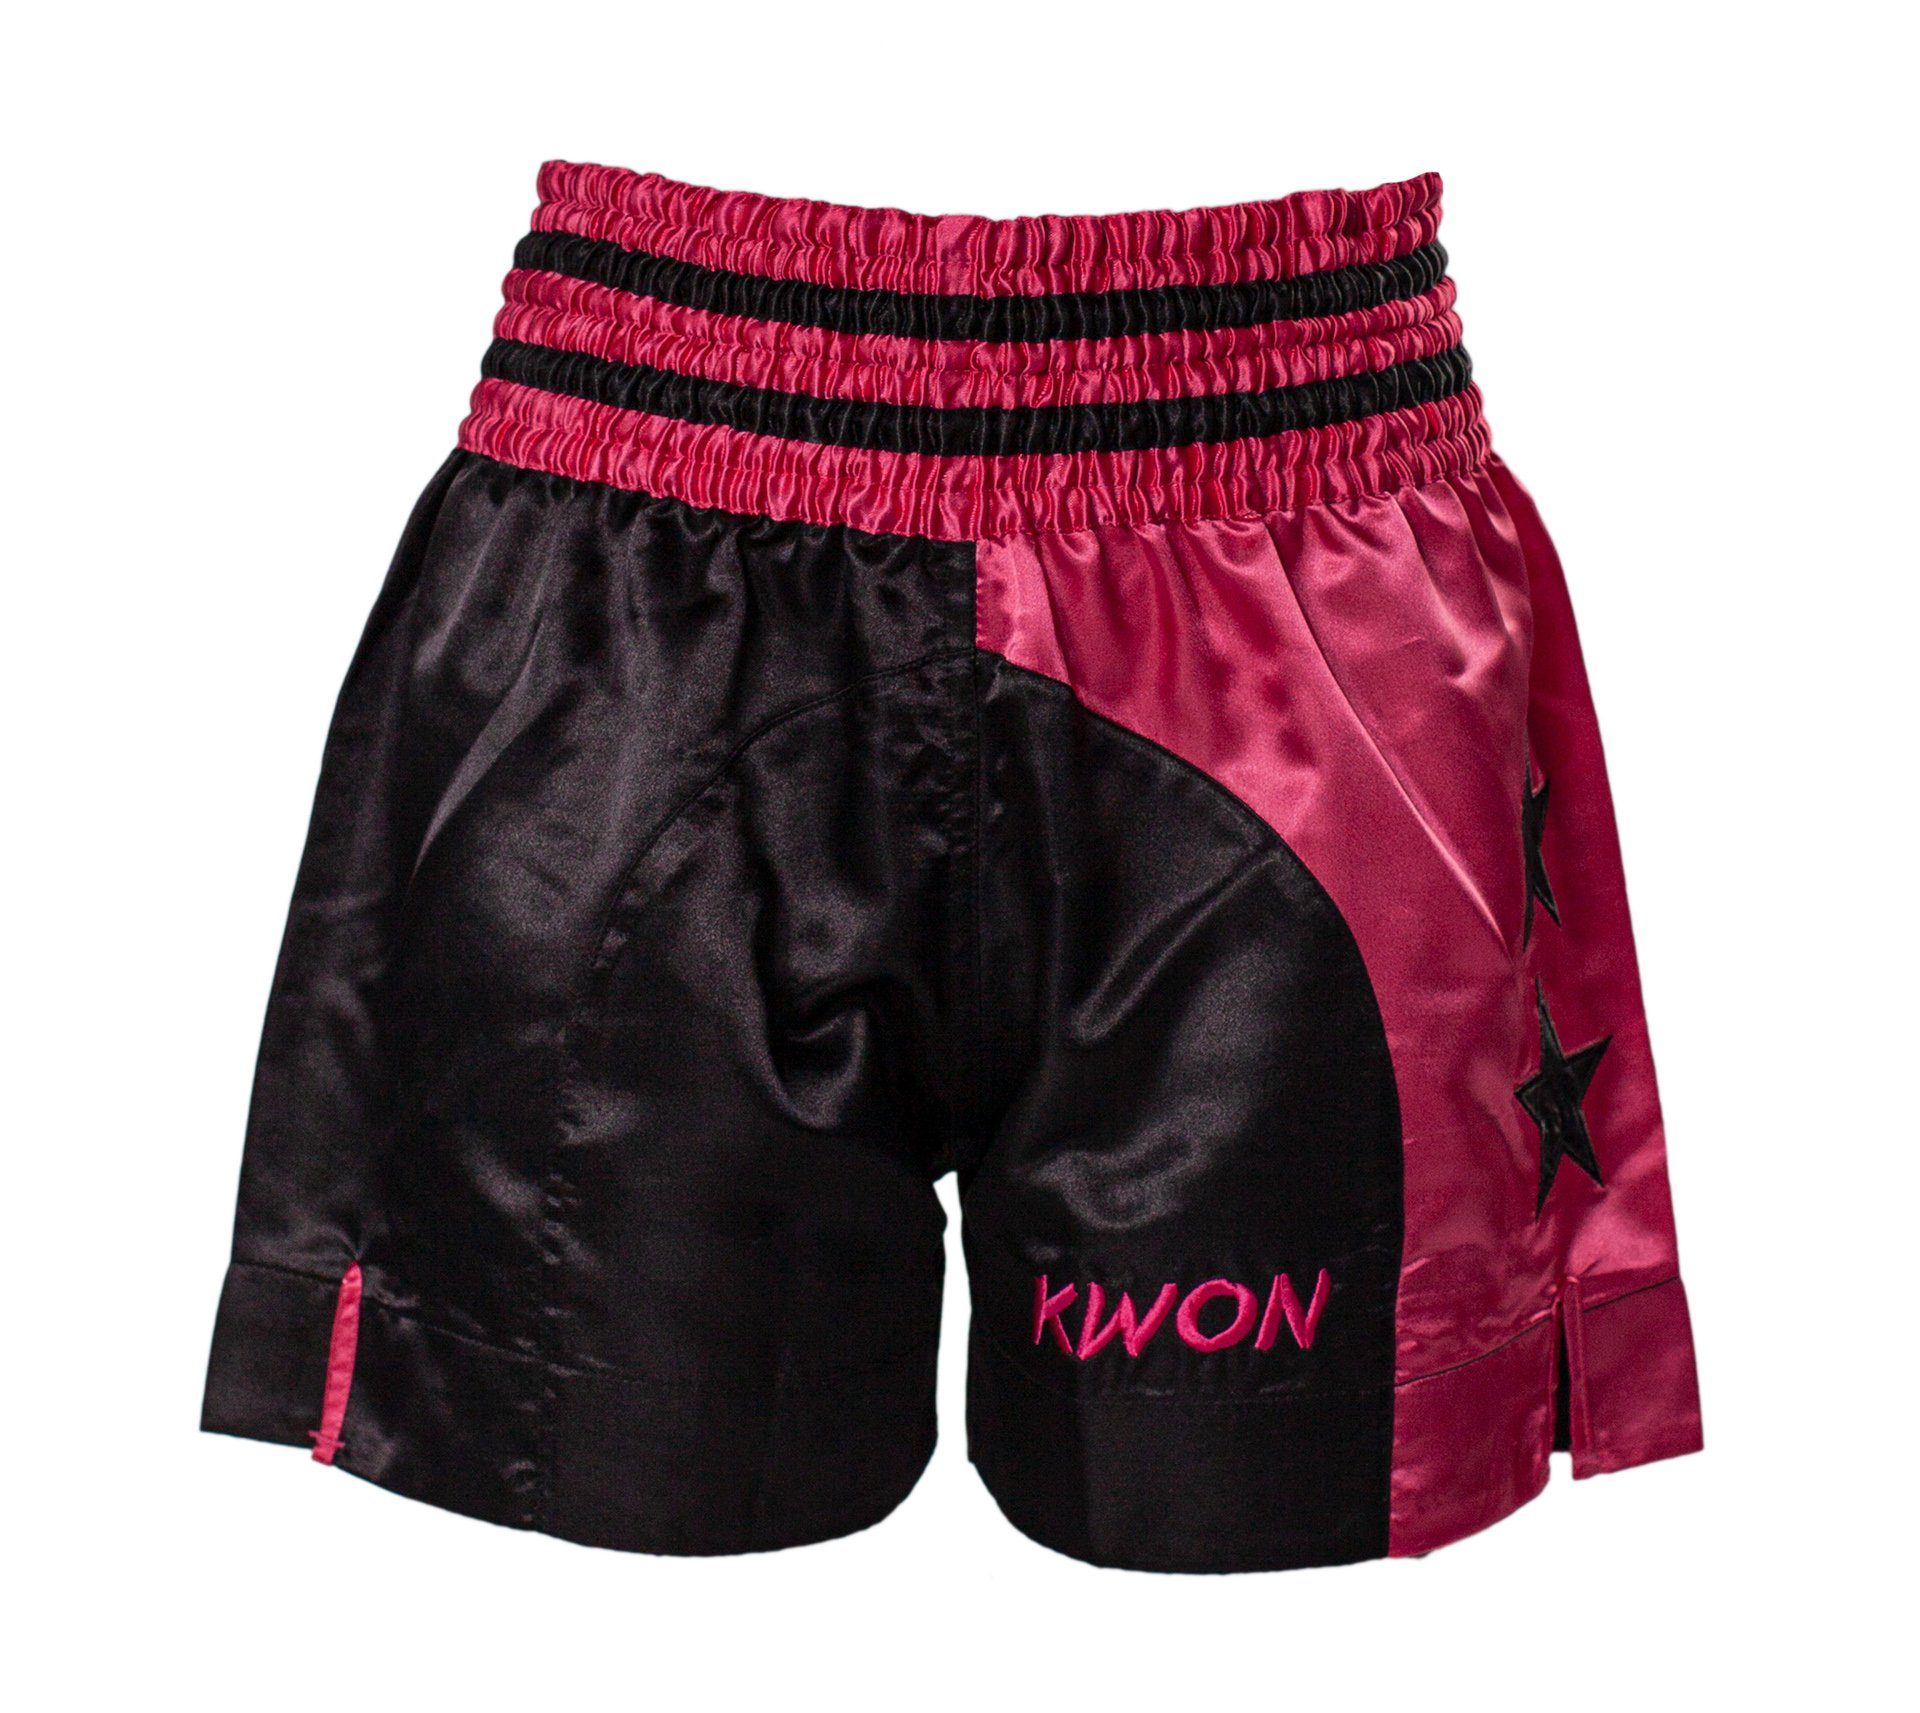 KWON Sporthose Thaiboxhose Damen Girl Muay Thai Shorts Kickboxen kurz magenta pink (Stück) Edler Look, traditioneller Schnitt, Sterne, kräftige Кольора(ів)